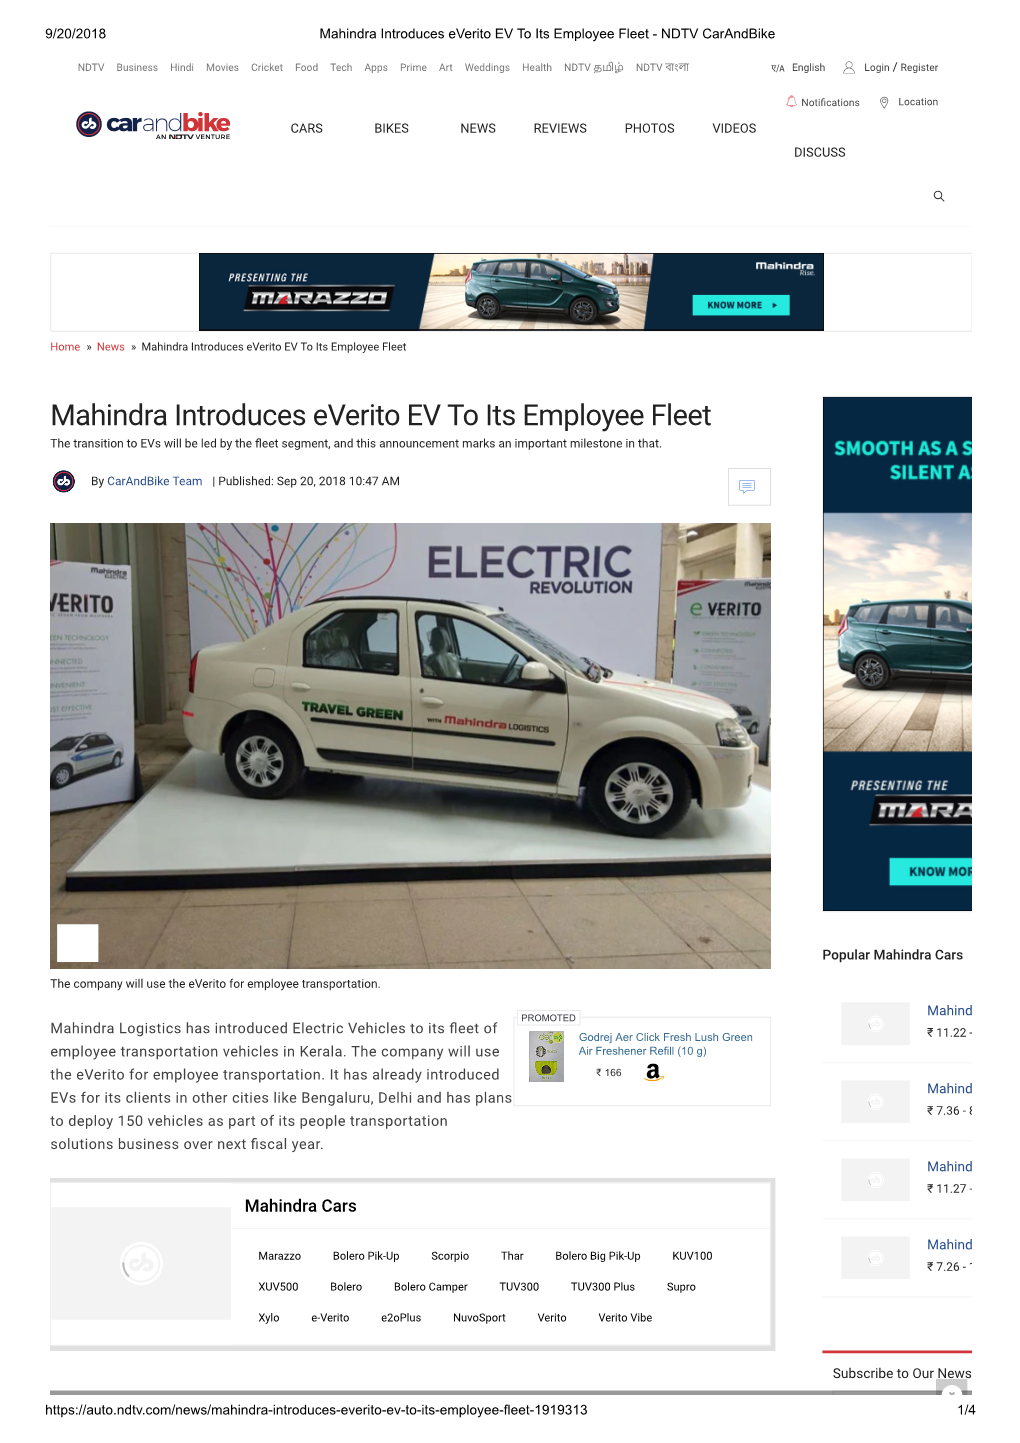 Mahindra Introduces Everito EV to Its Employee Fleet - NDTV Carandbike